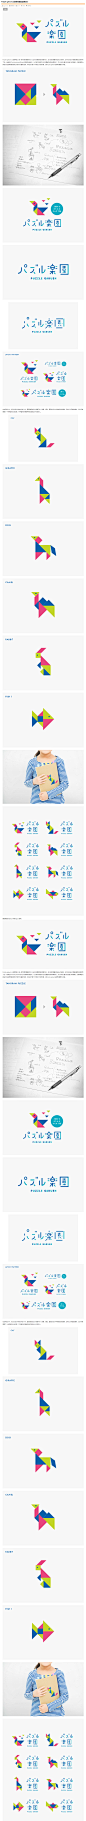 Puzzle gakuen儿童教育服务品牌设计|标志可乐！-Logocola.com